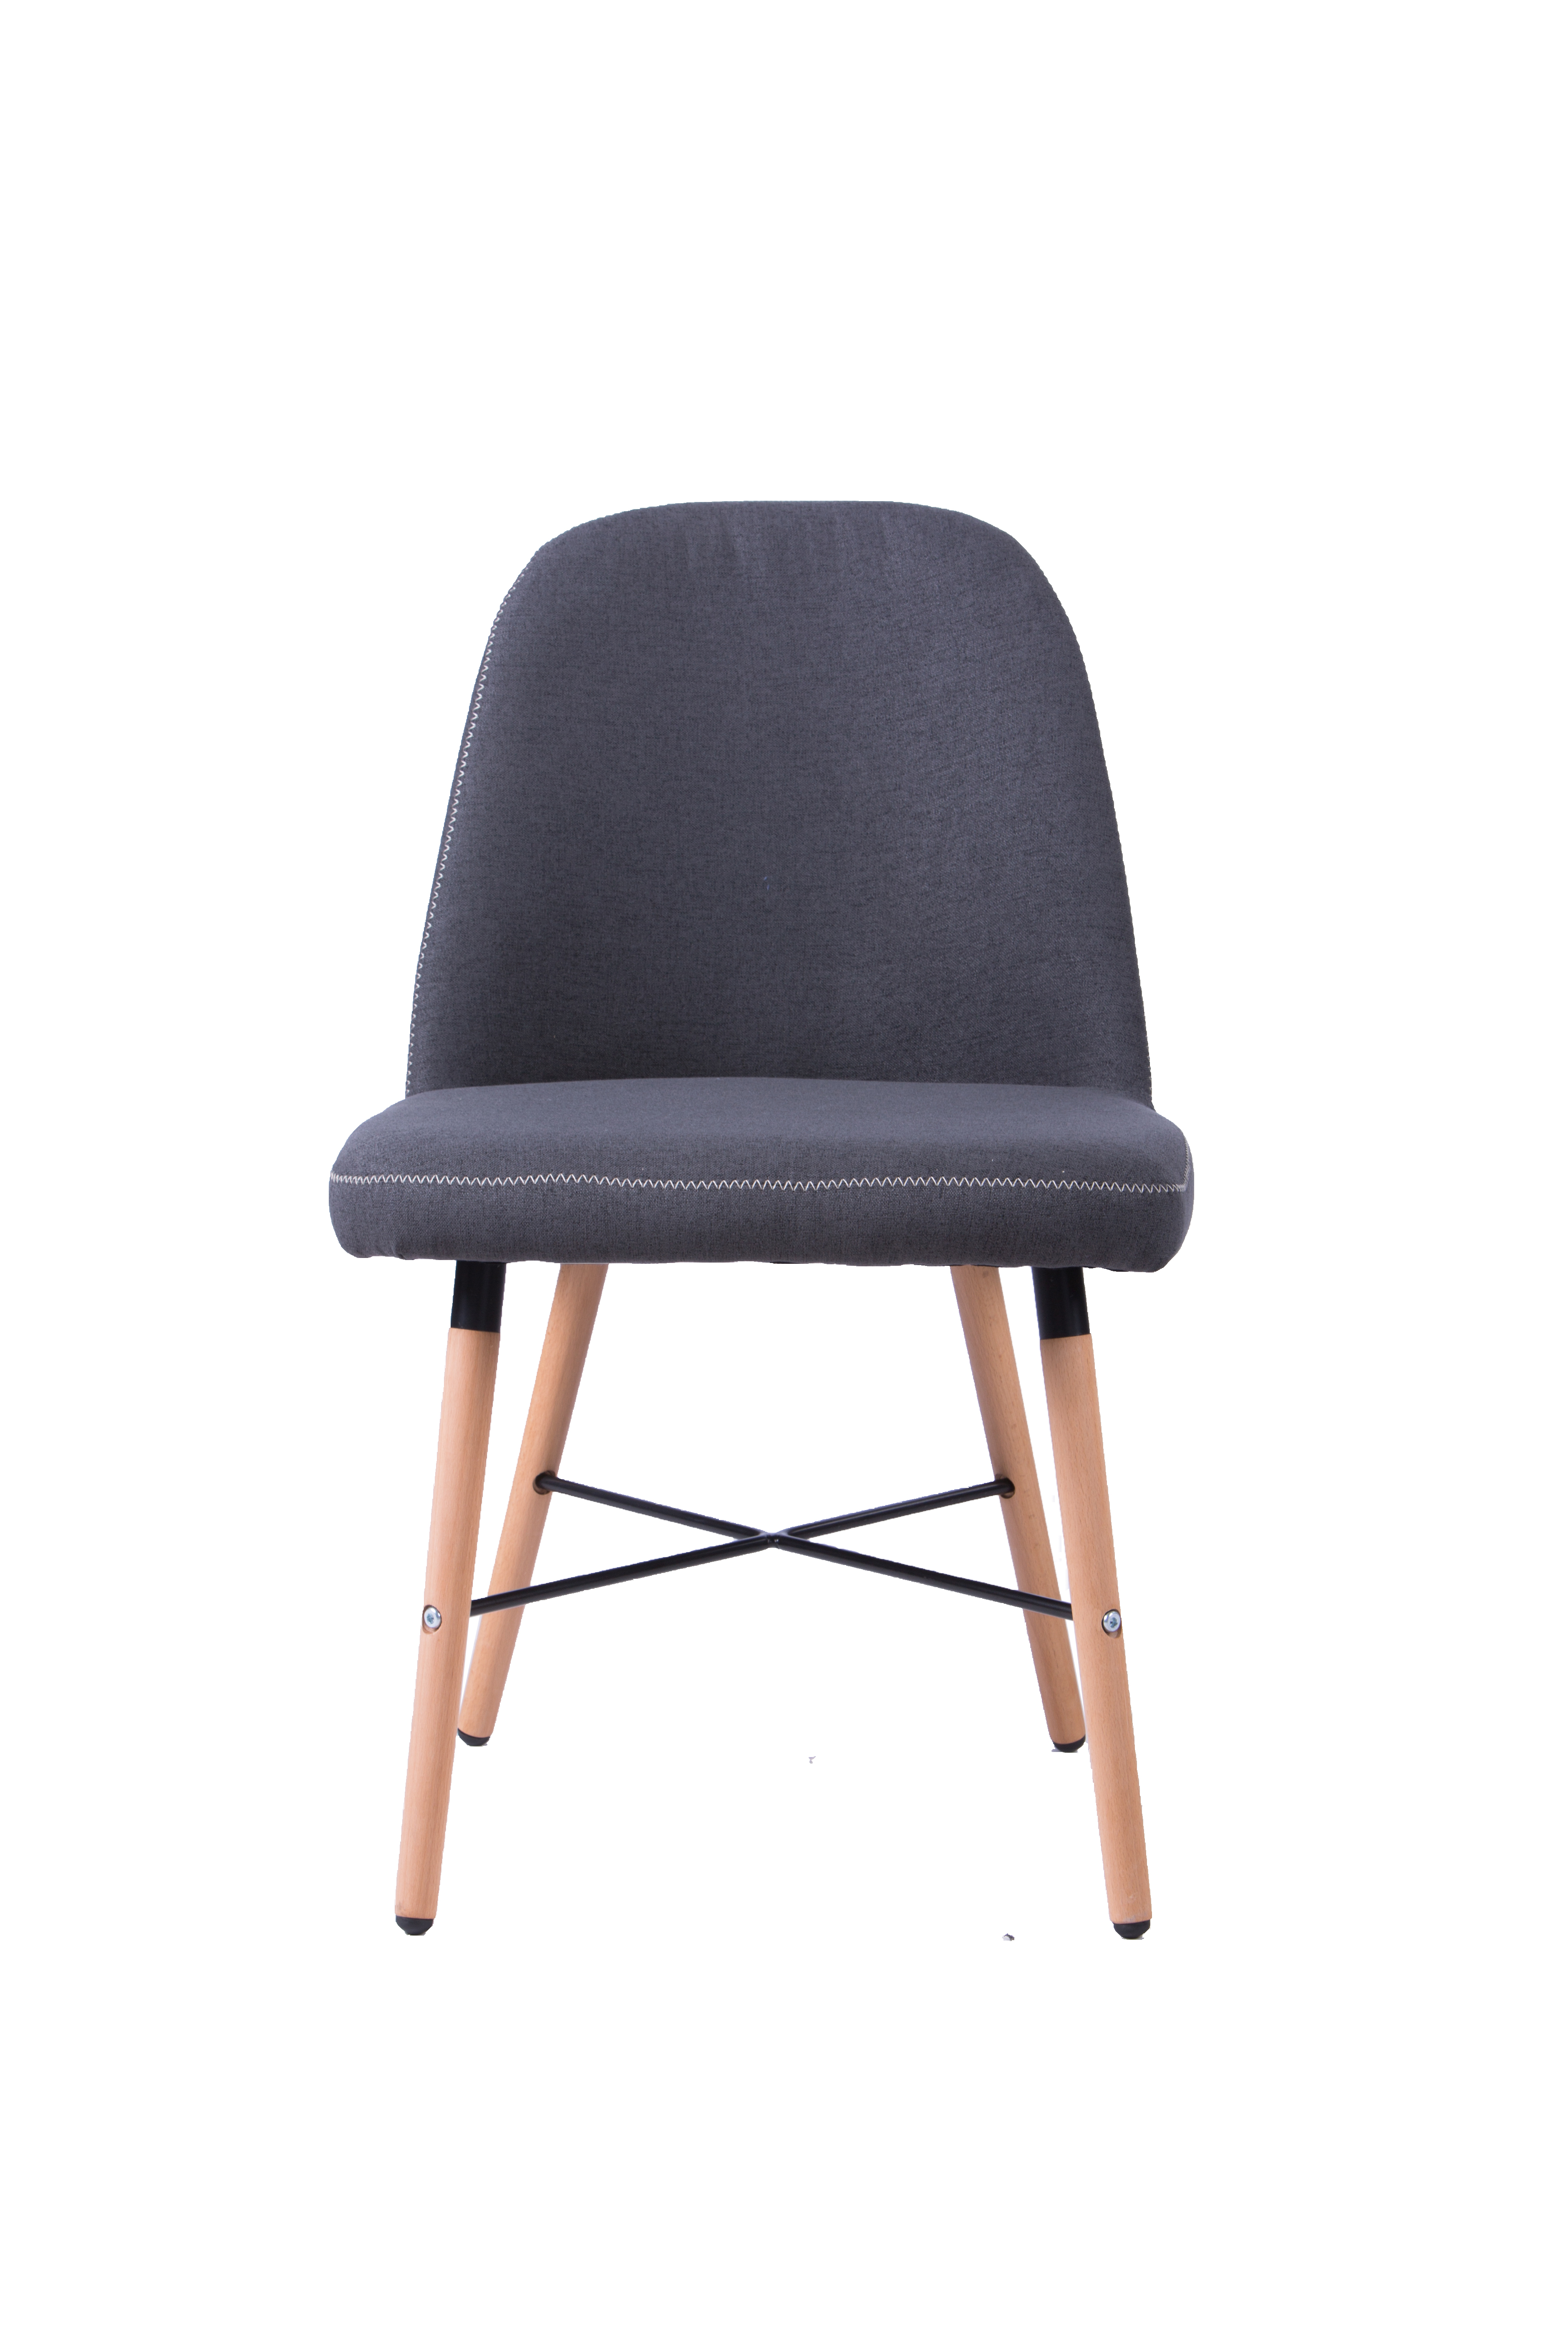 9-01M Modern Fashionable Dining Chair